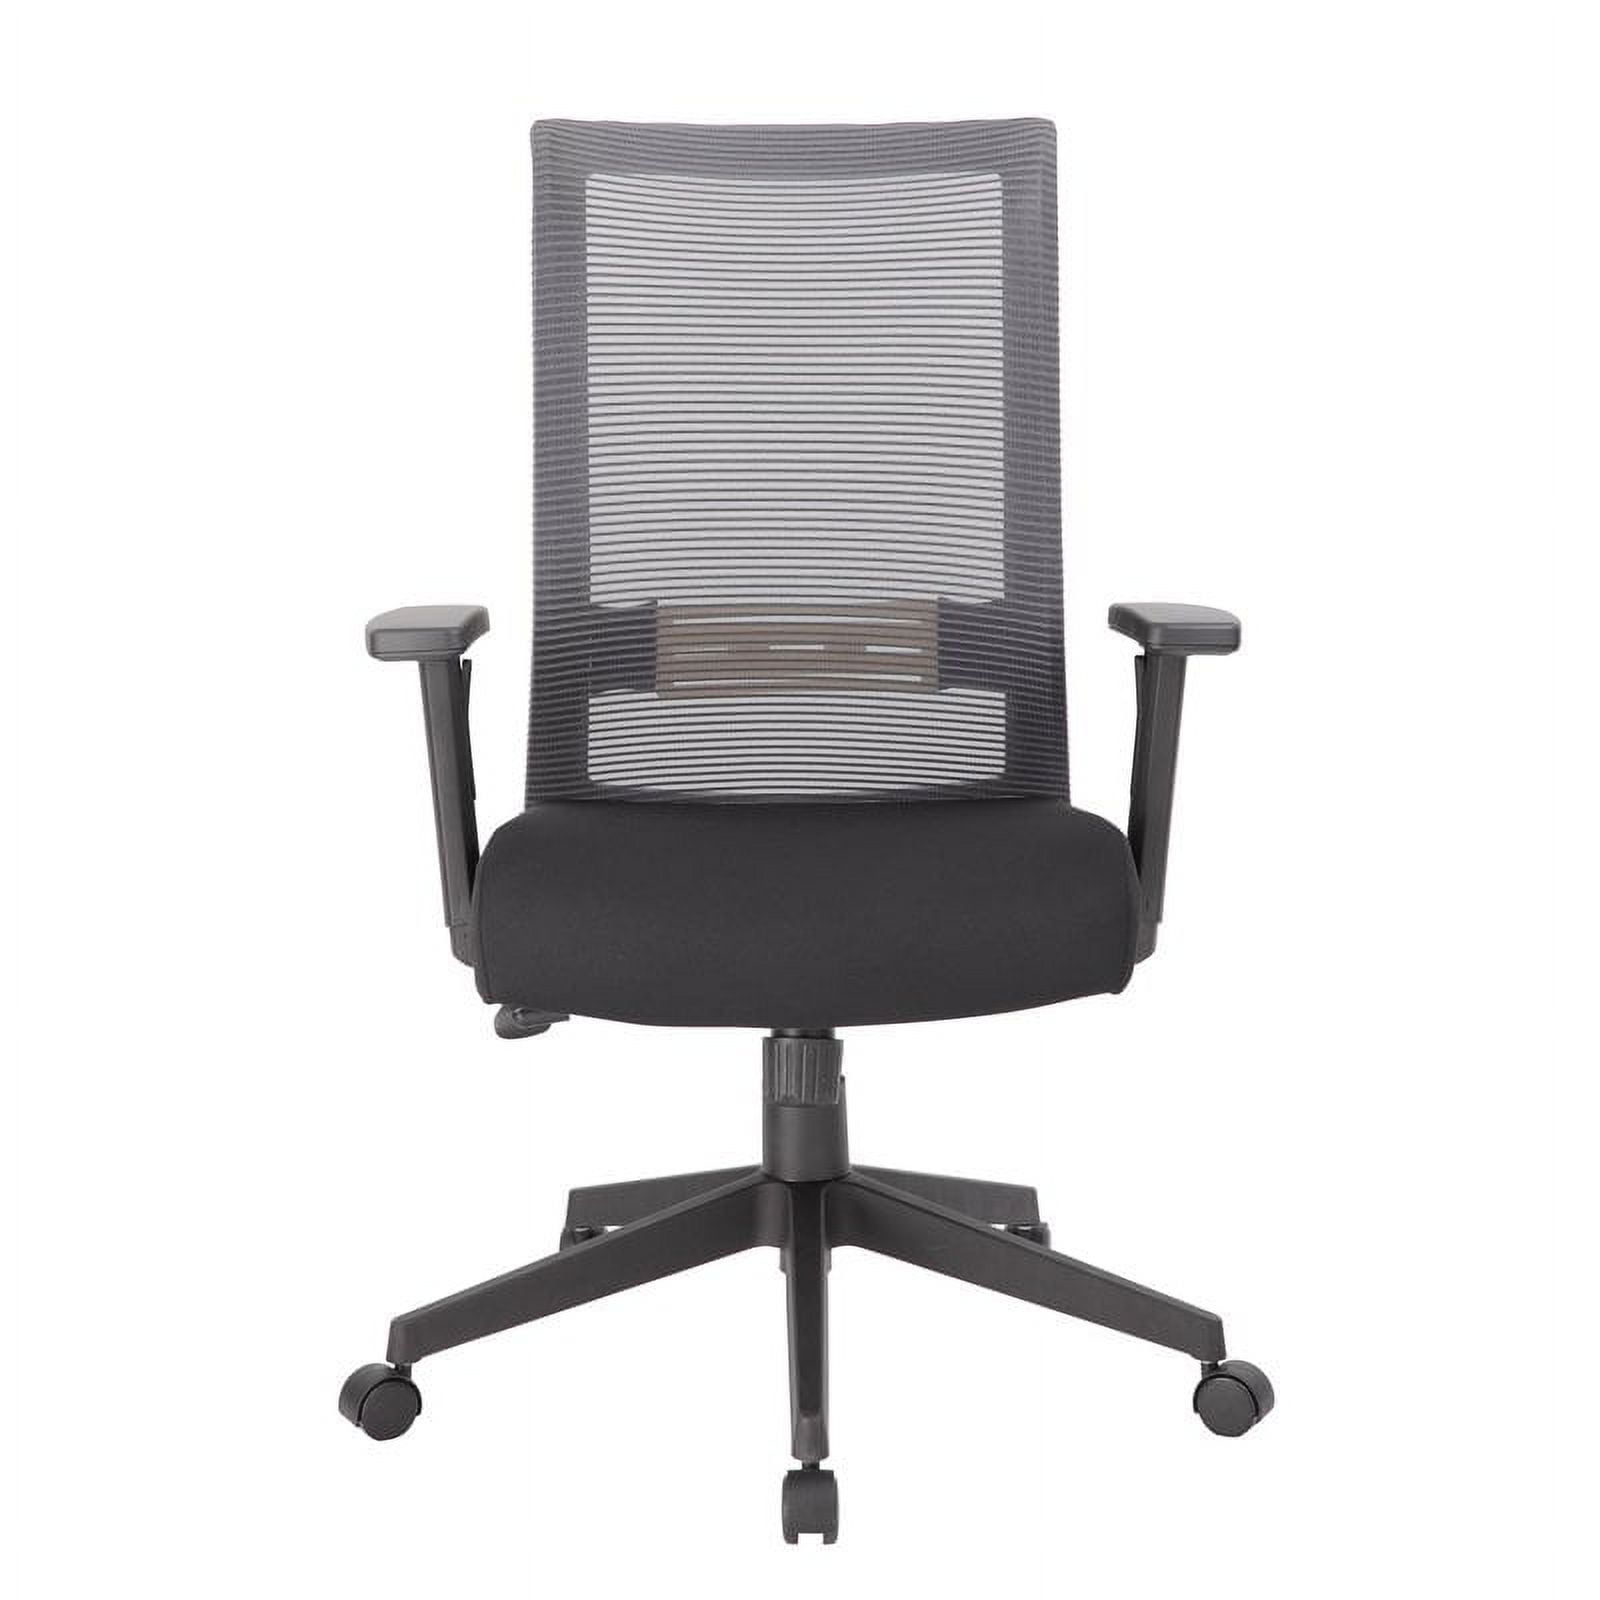 B6566gy-bk Mesh Task Chair, Grey & Black